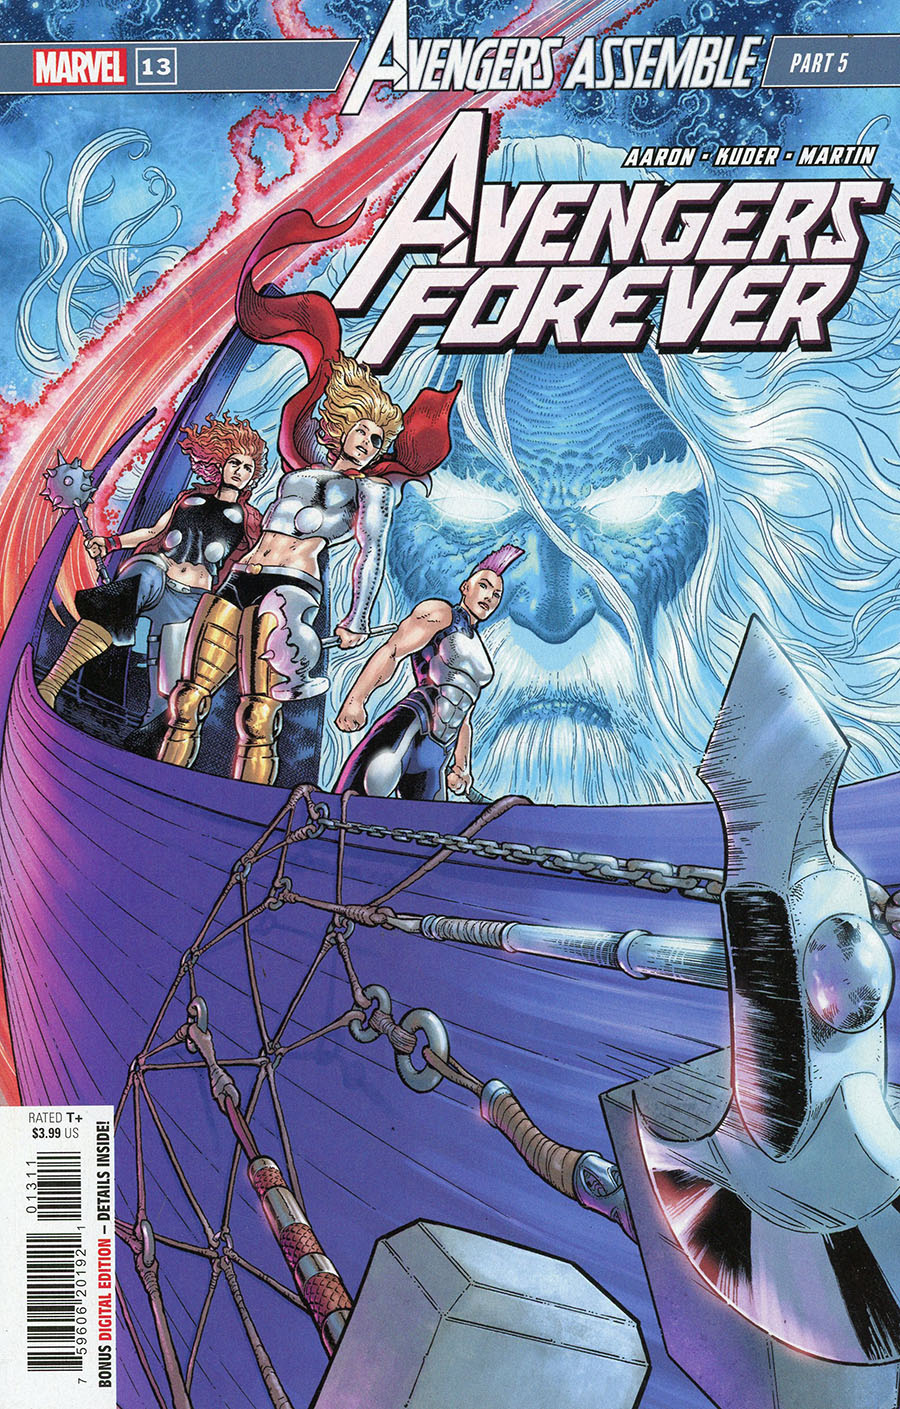 Avengers Forever Vol 2 #13 Cover A Regular Aaron Kuder Cover (Avengers Assemble Part 5)